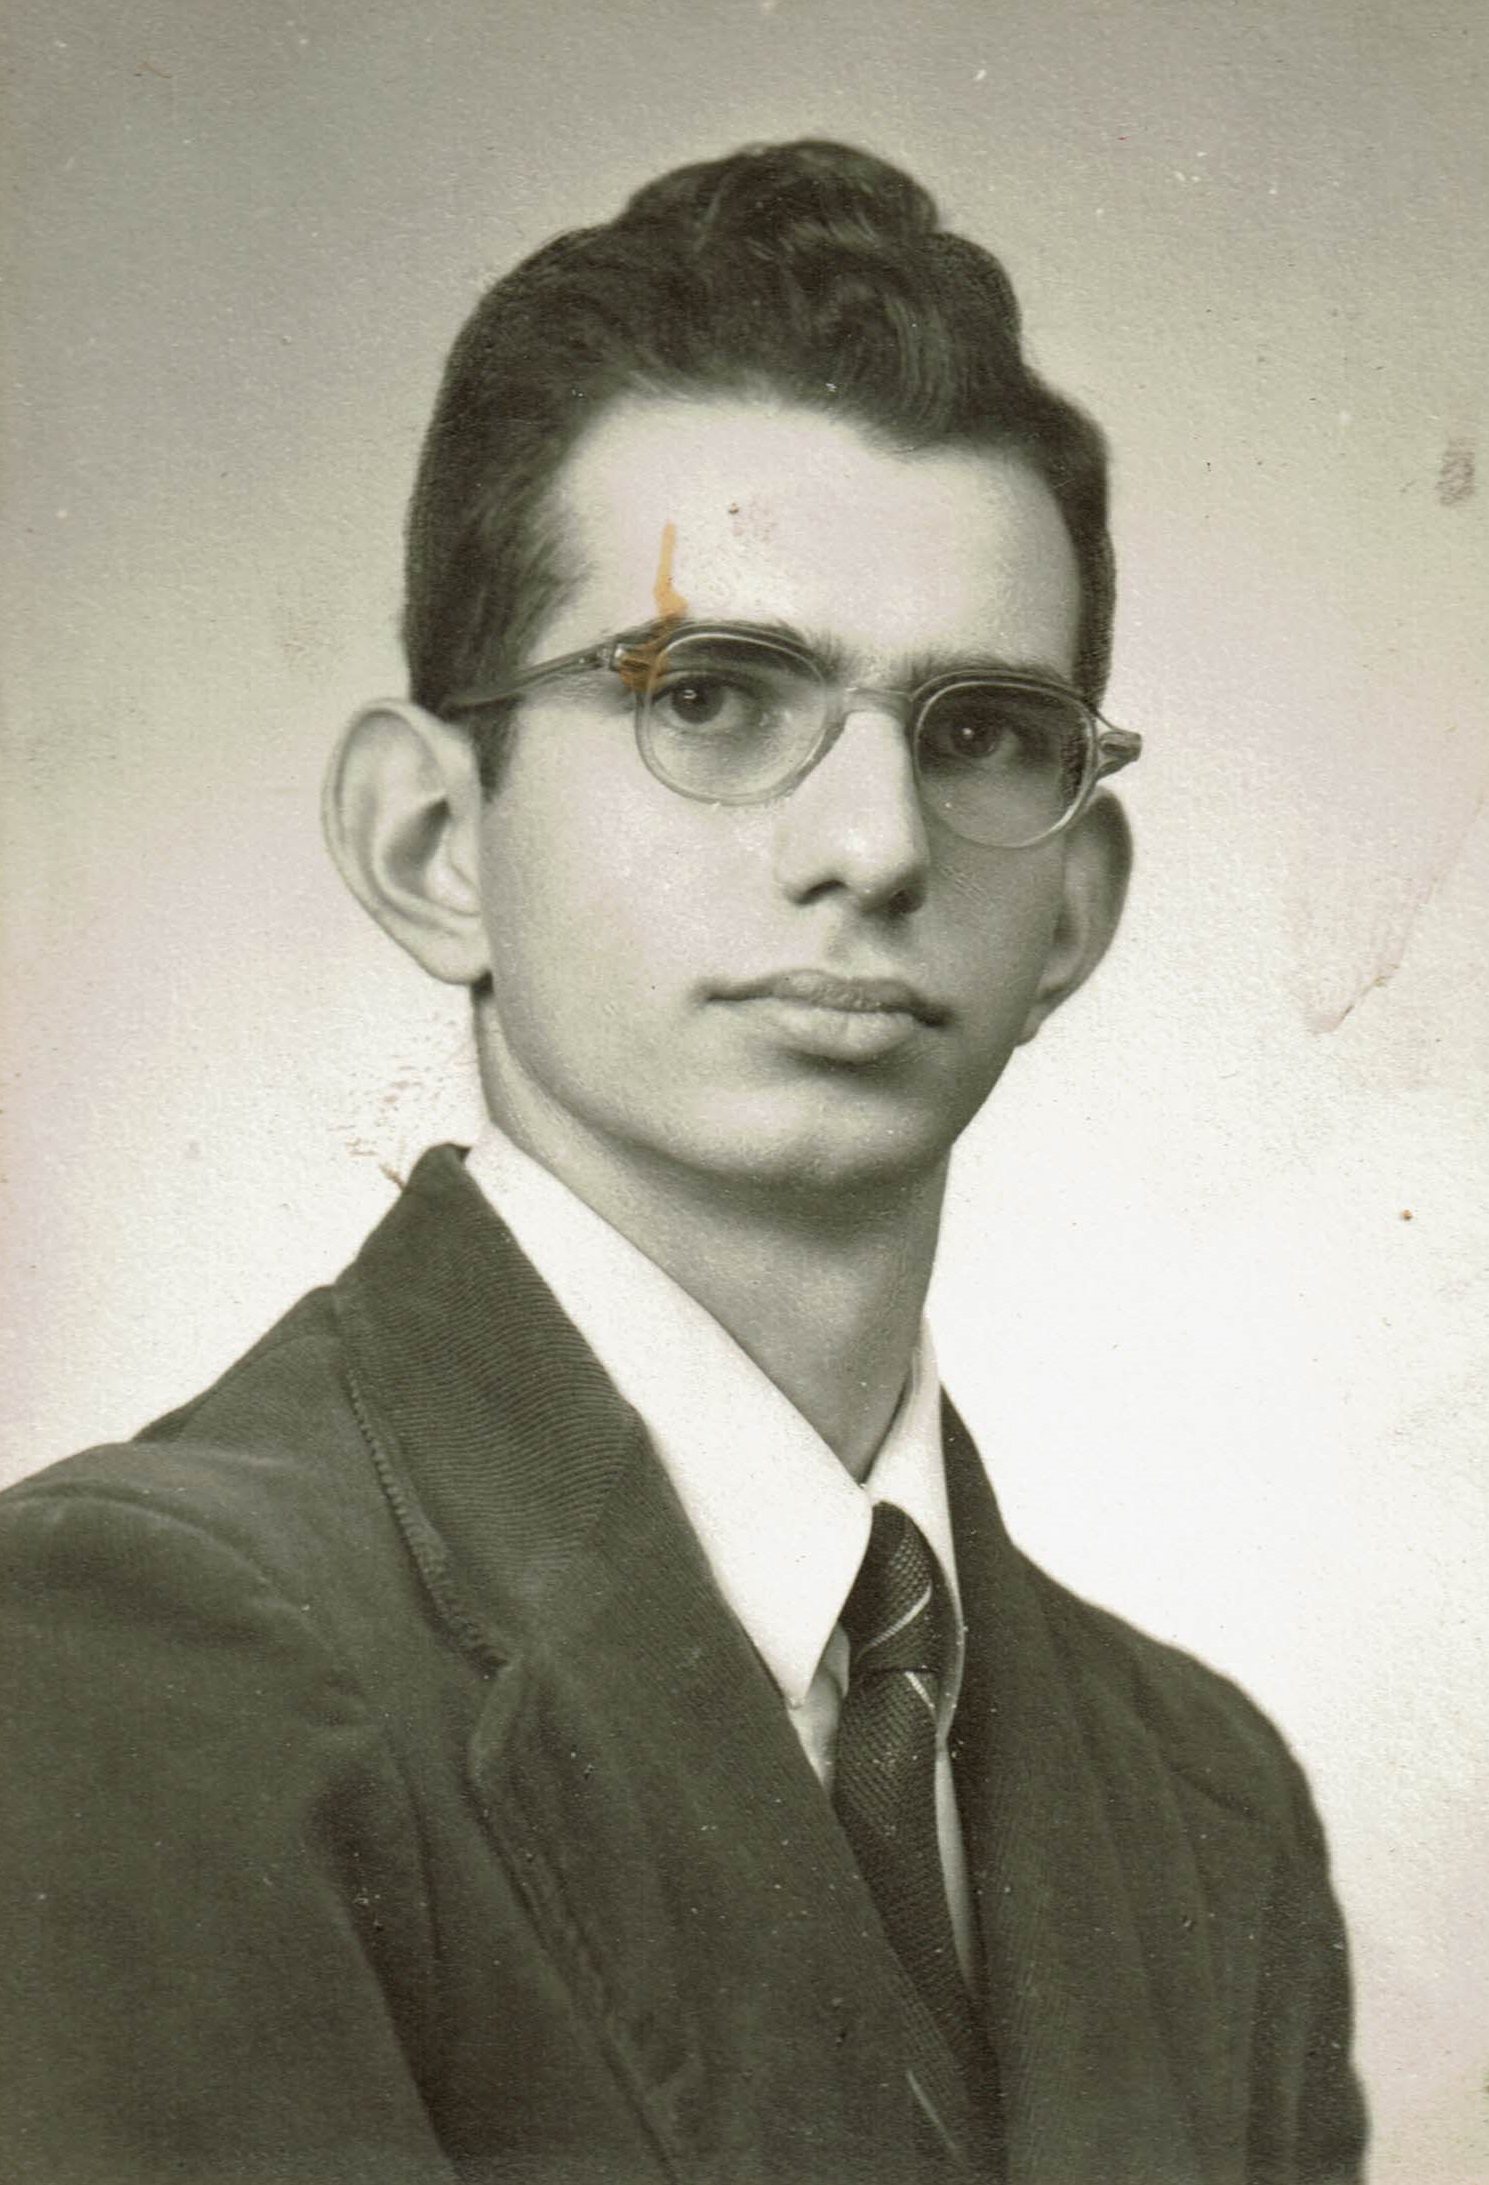 Photo of Bill Thompson HS Graduation 1954